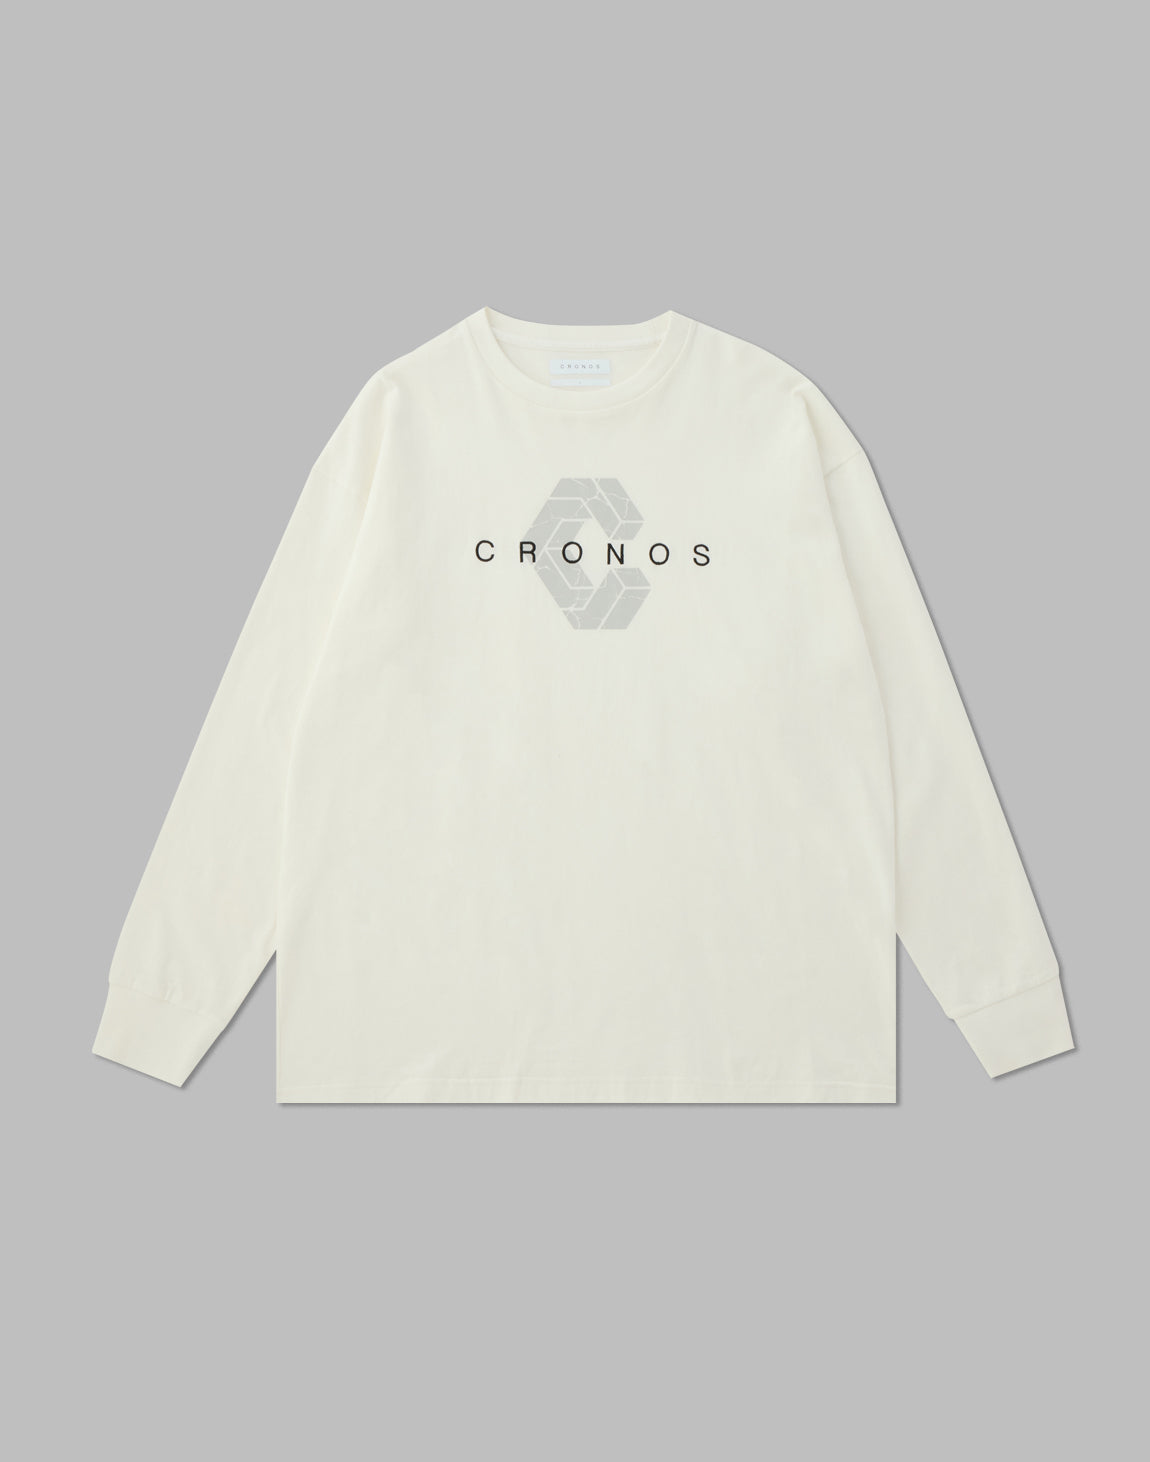 CRONOS LOGO LONGSLEEVE【ORANGE】Tシャツ-綿100%